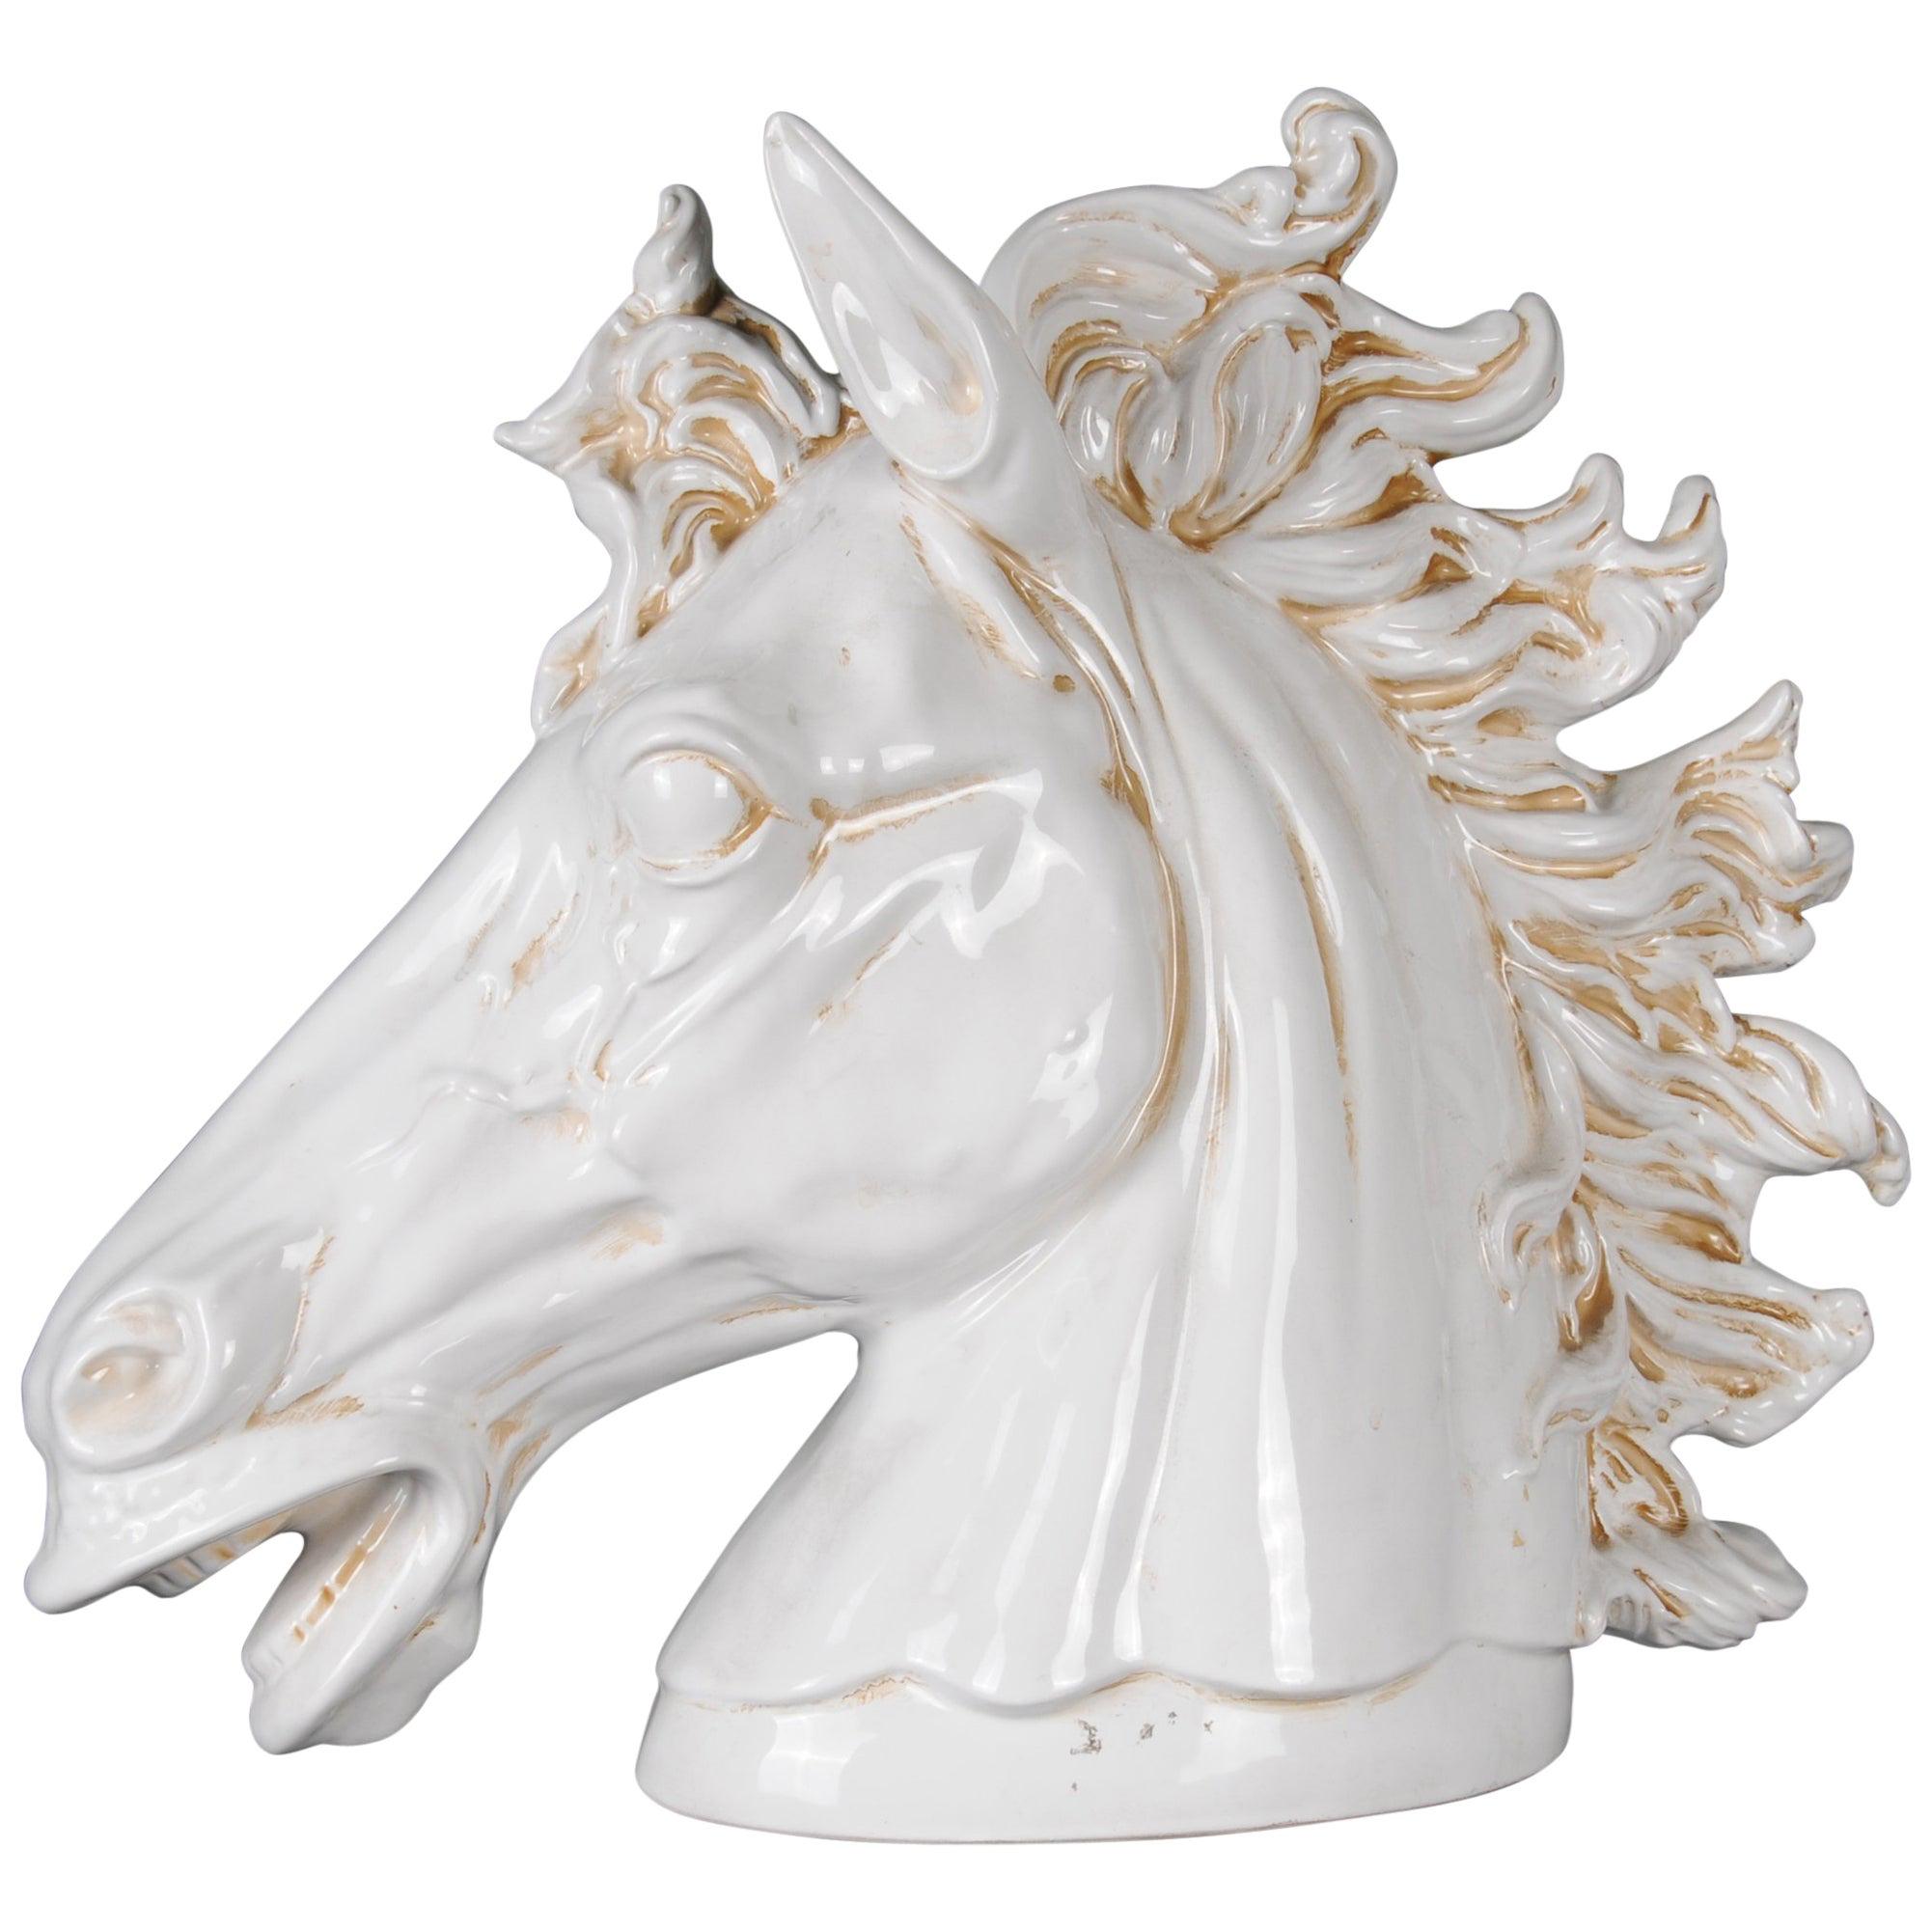 Monumentaler Pferdekopf des 20. Jahrhunderts, weiße Pferdekeramik